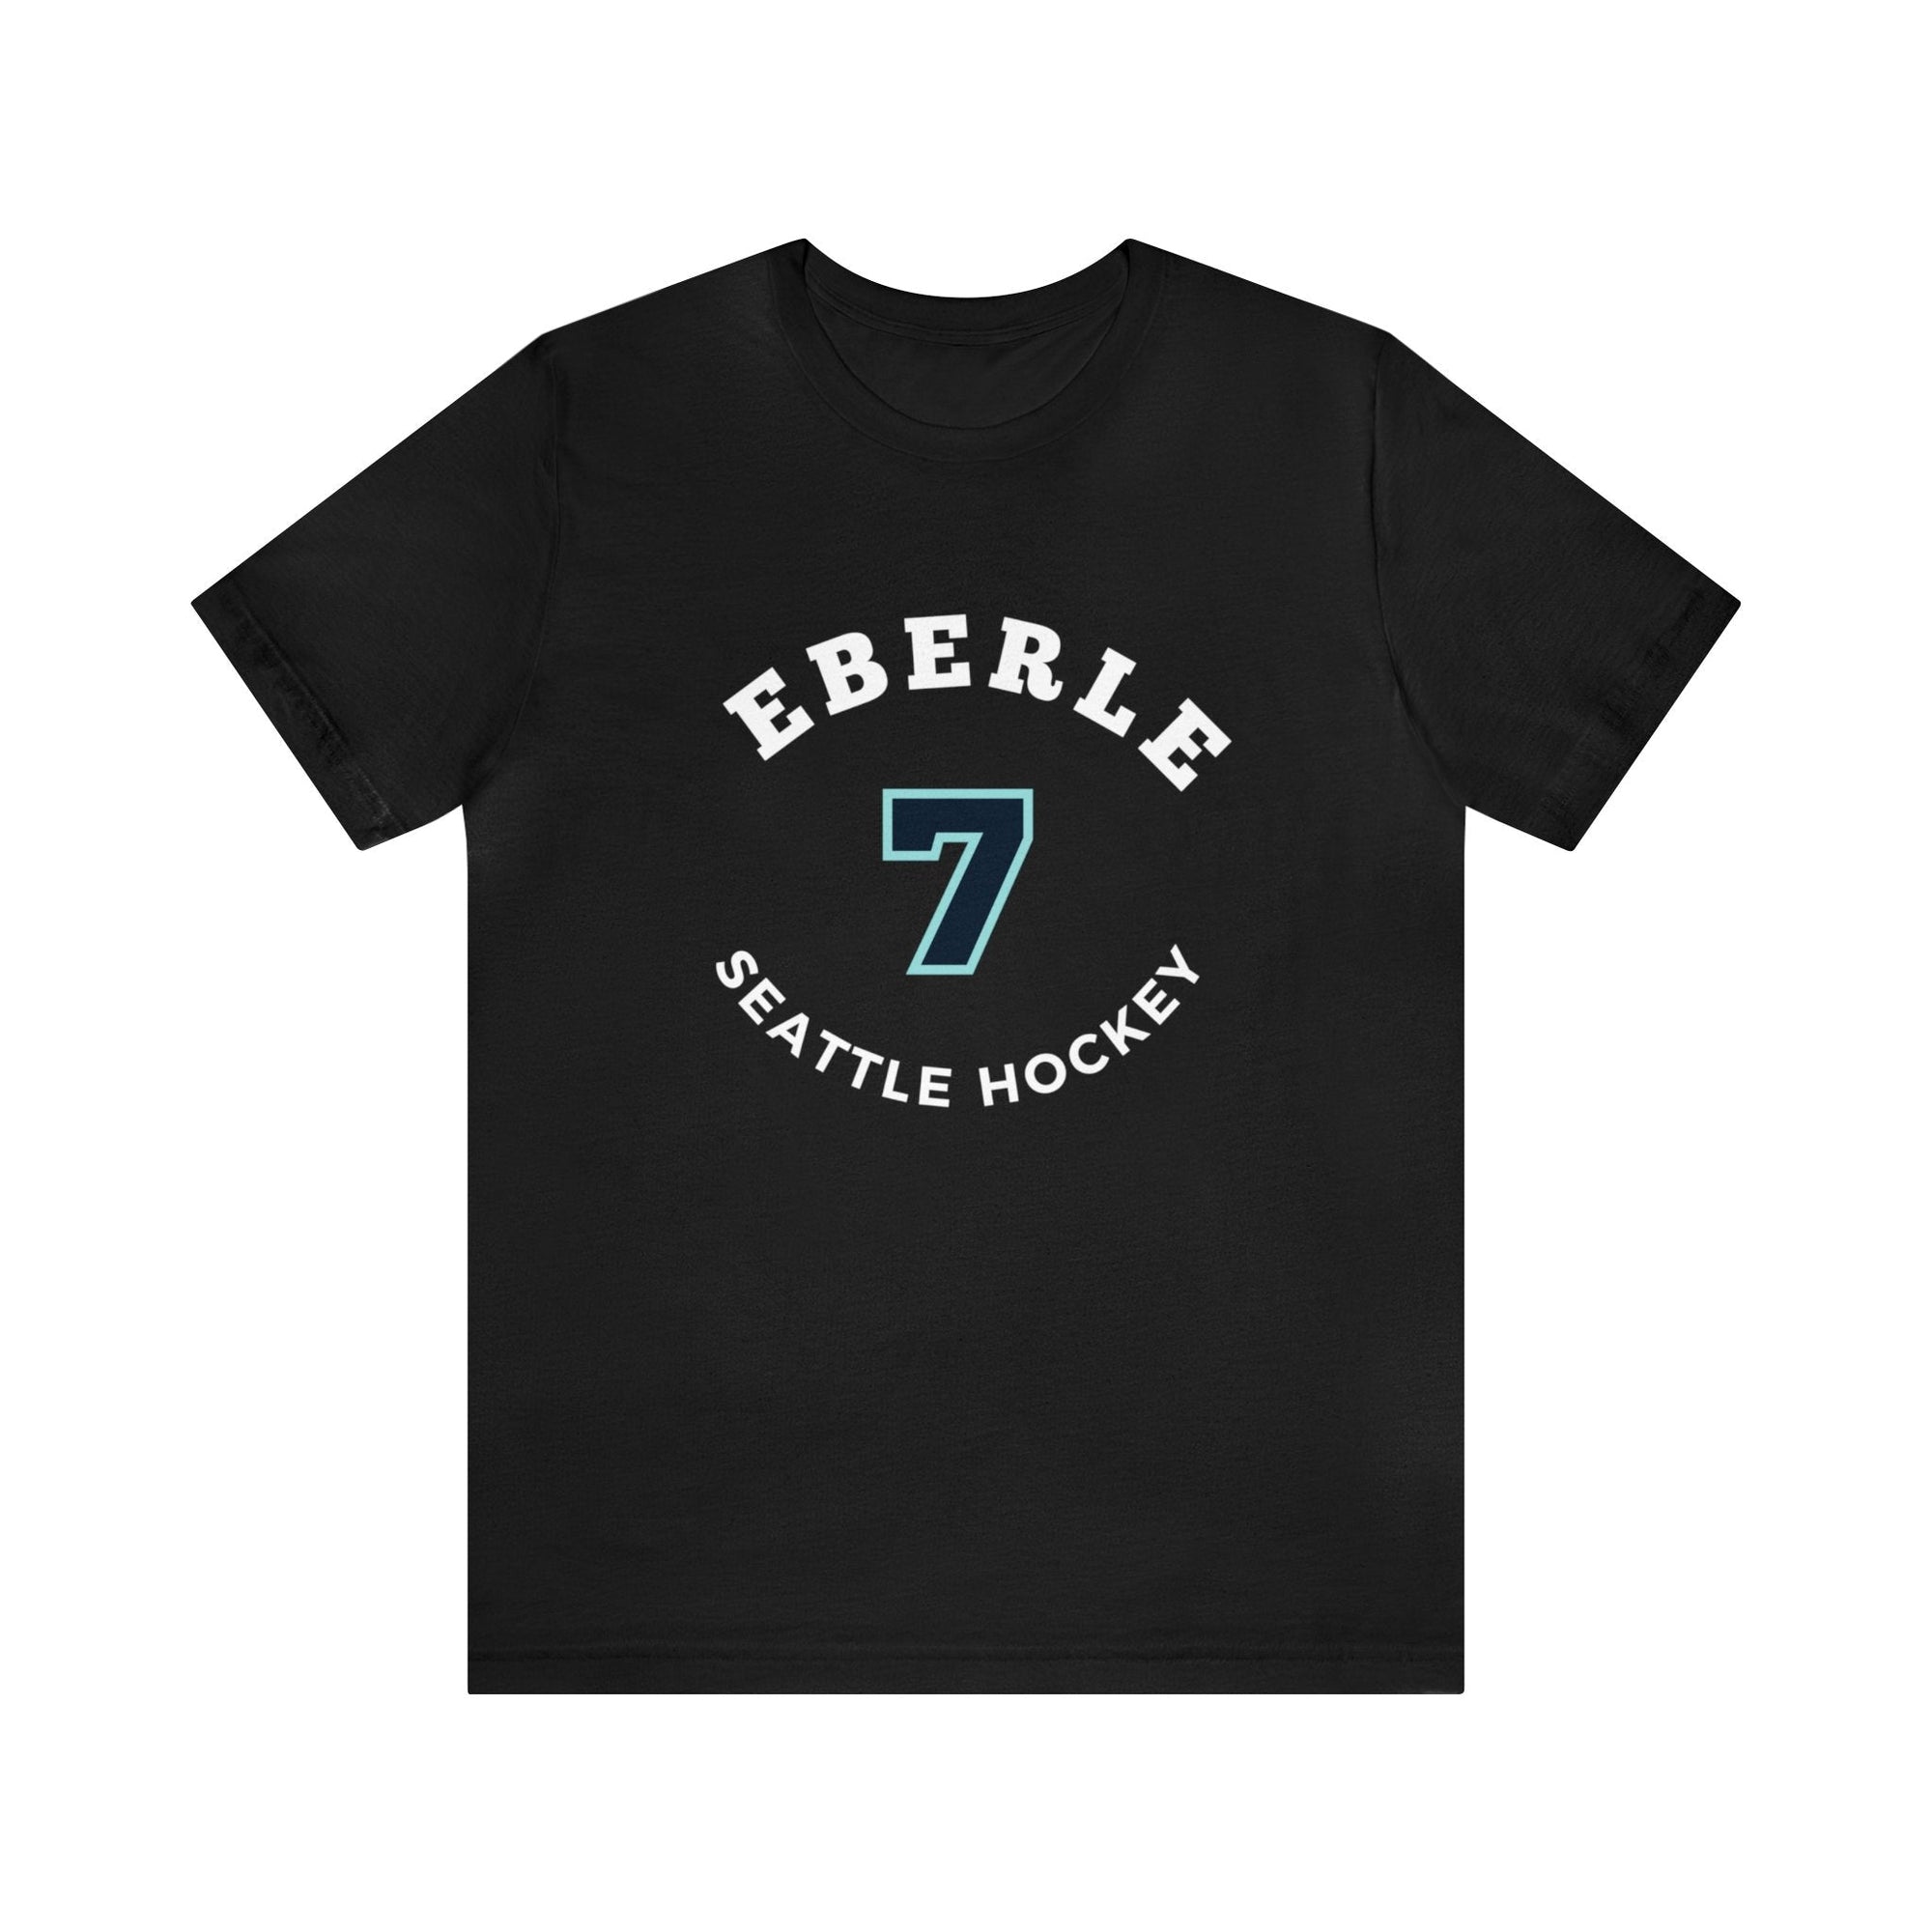 T-Shirt Eberle 7 Seattle Hockey Number Arch Design Unisex T-Shirt